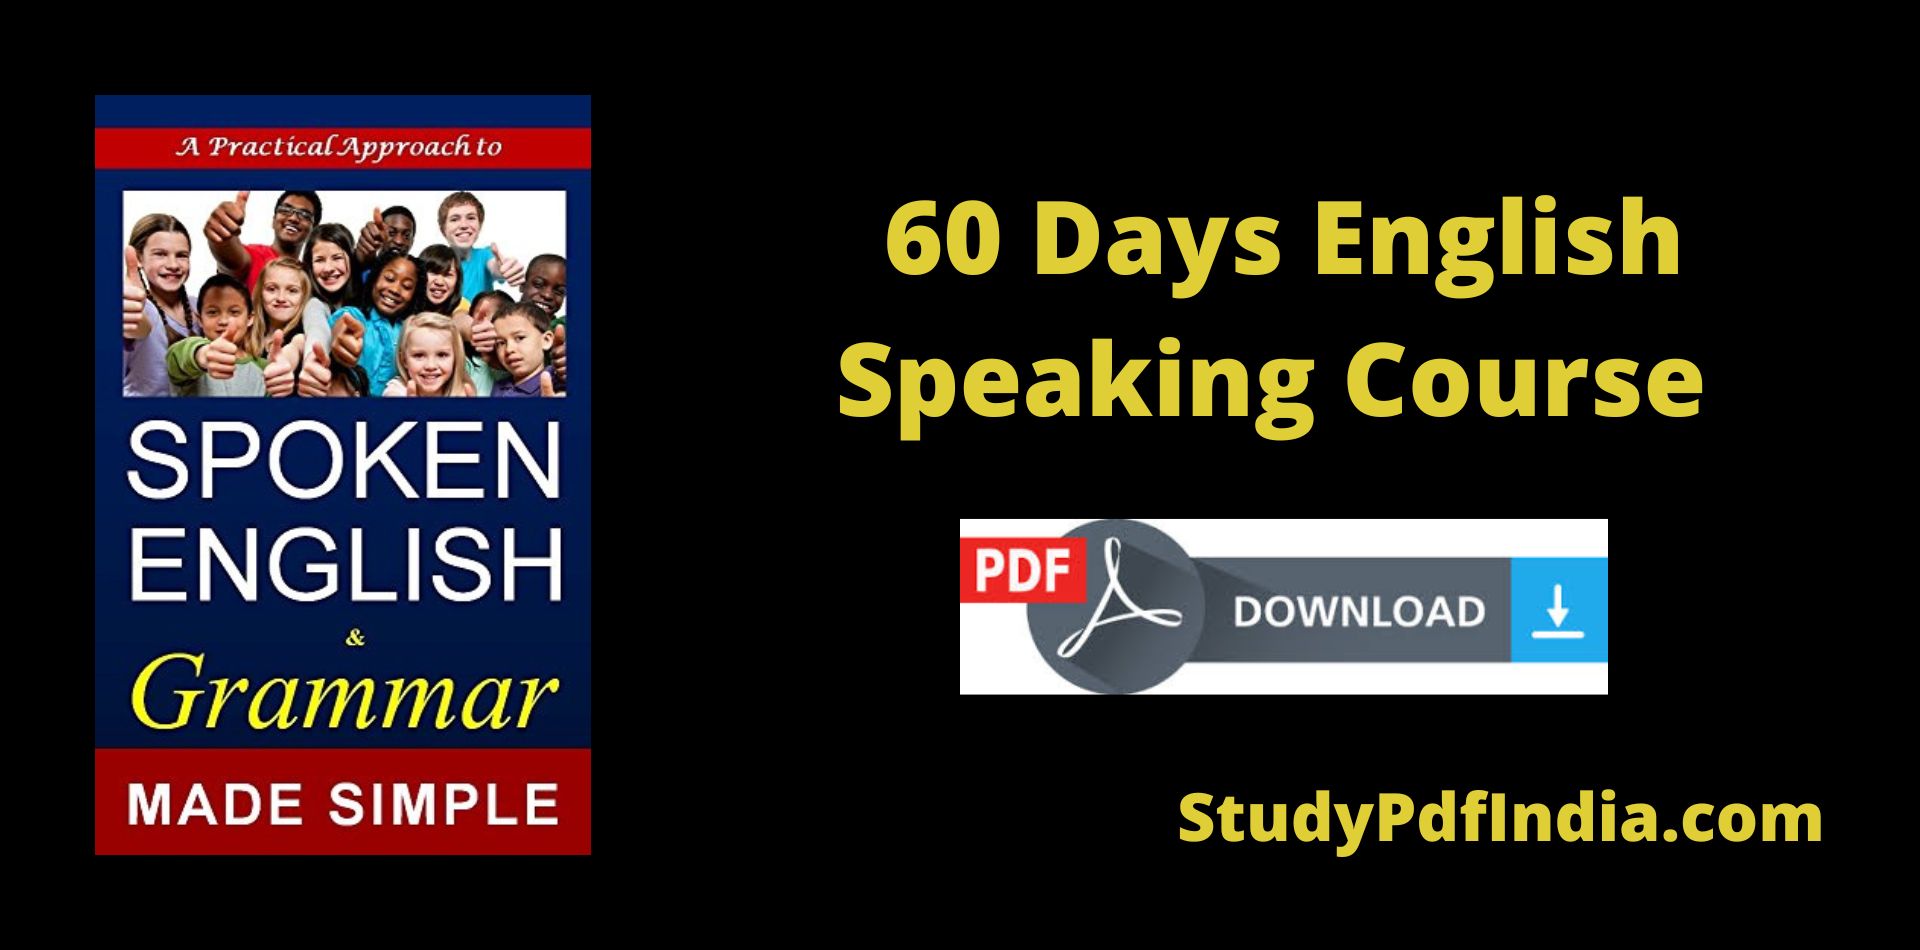 60 Days English Speaking Course PDF Download